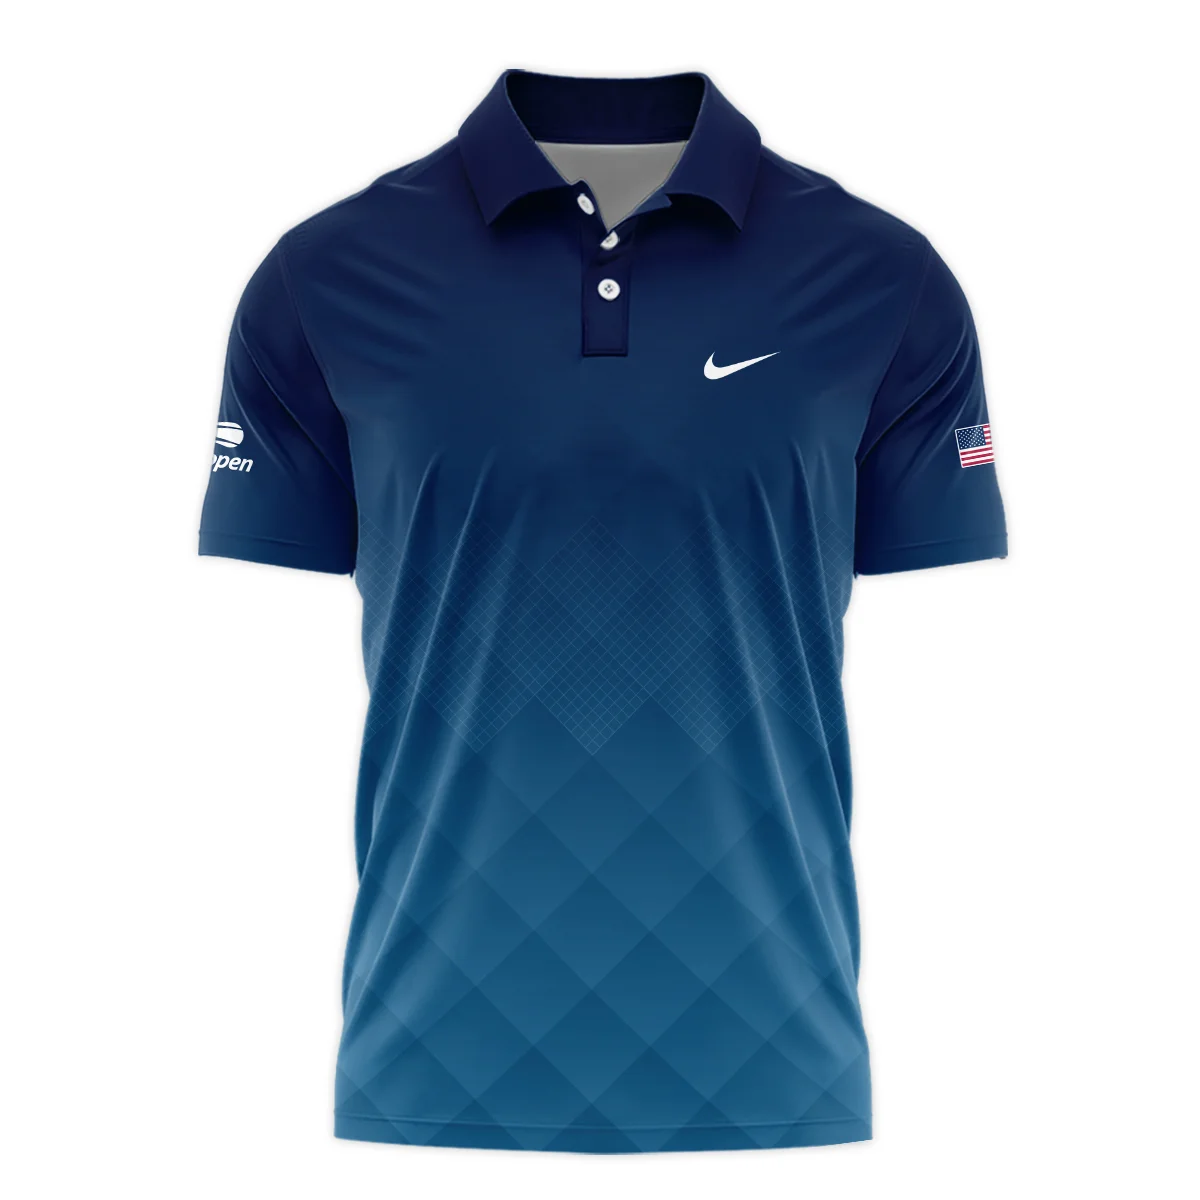 Nike Blue Abstract Background US Open Tennis Champions Polo Shirt Mandarin Collar Polo Shirt